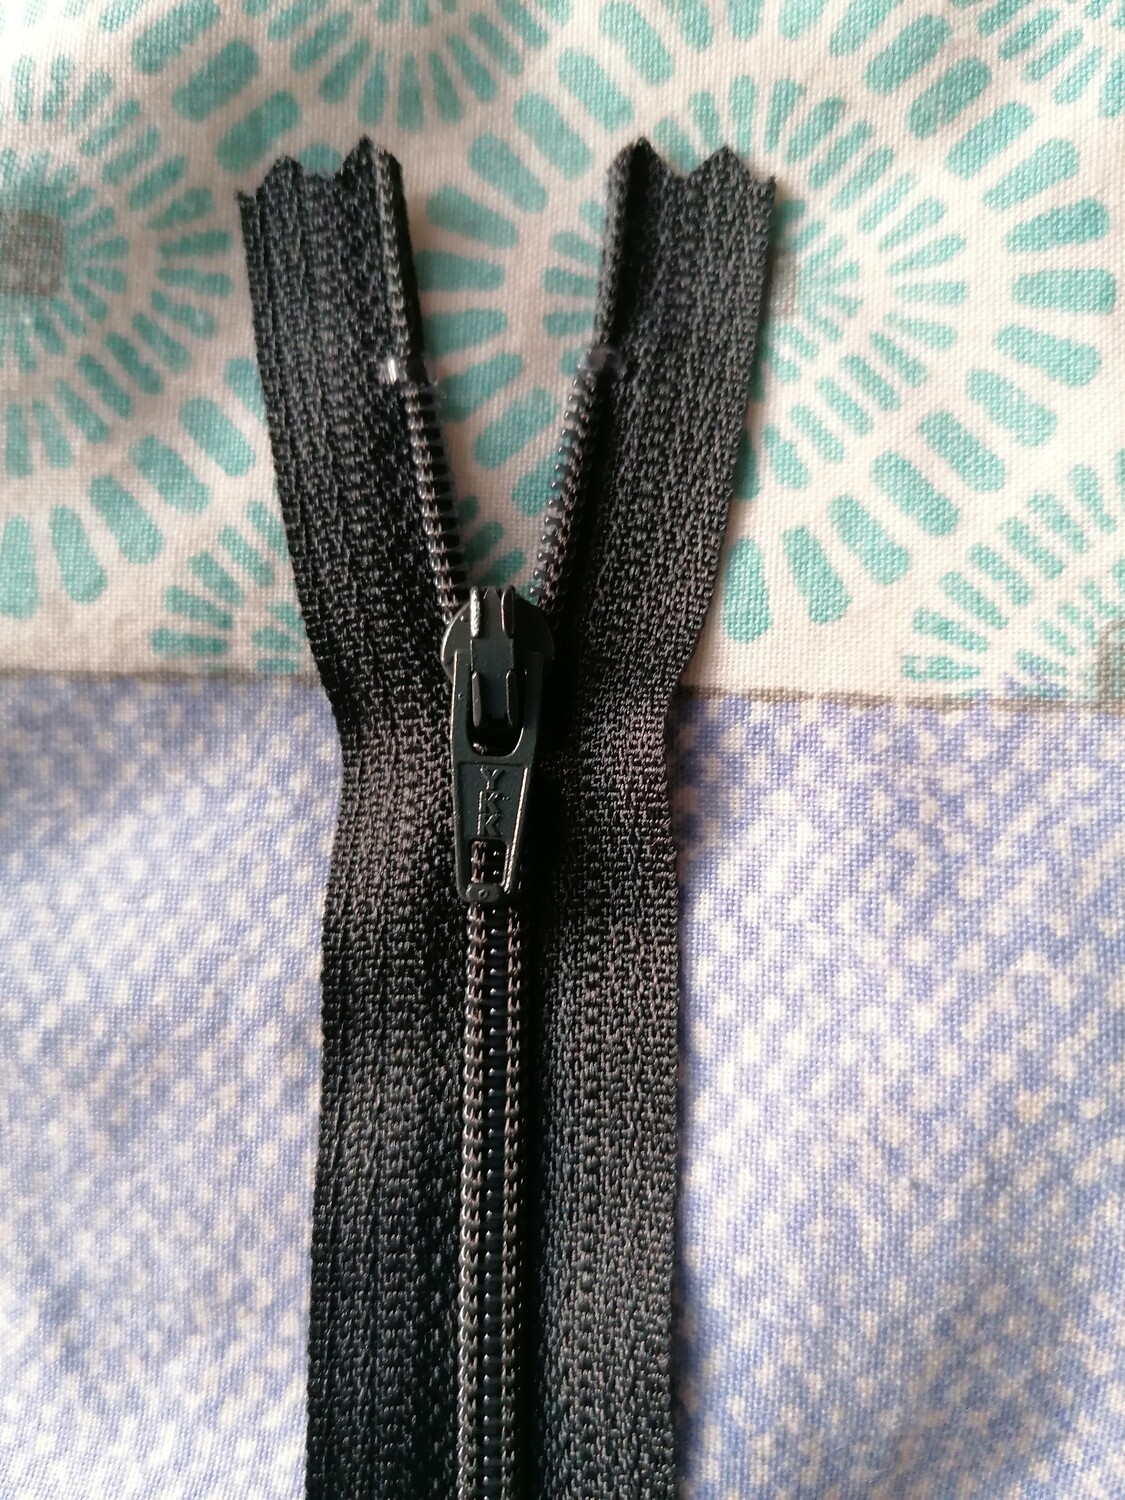 20cm (8") nylon closed end zip